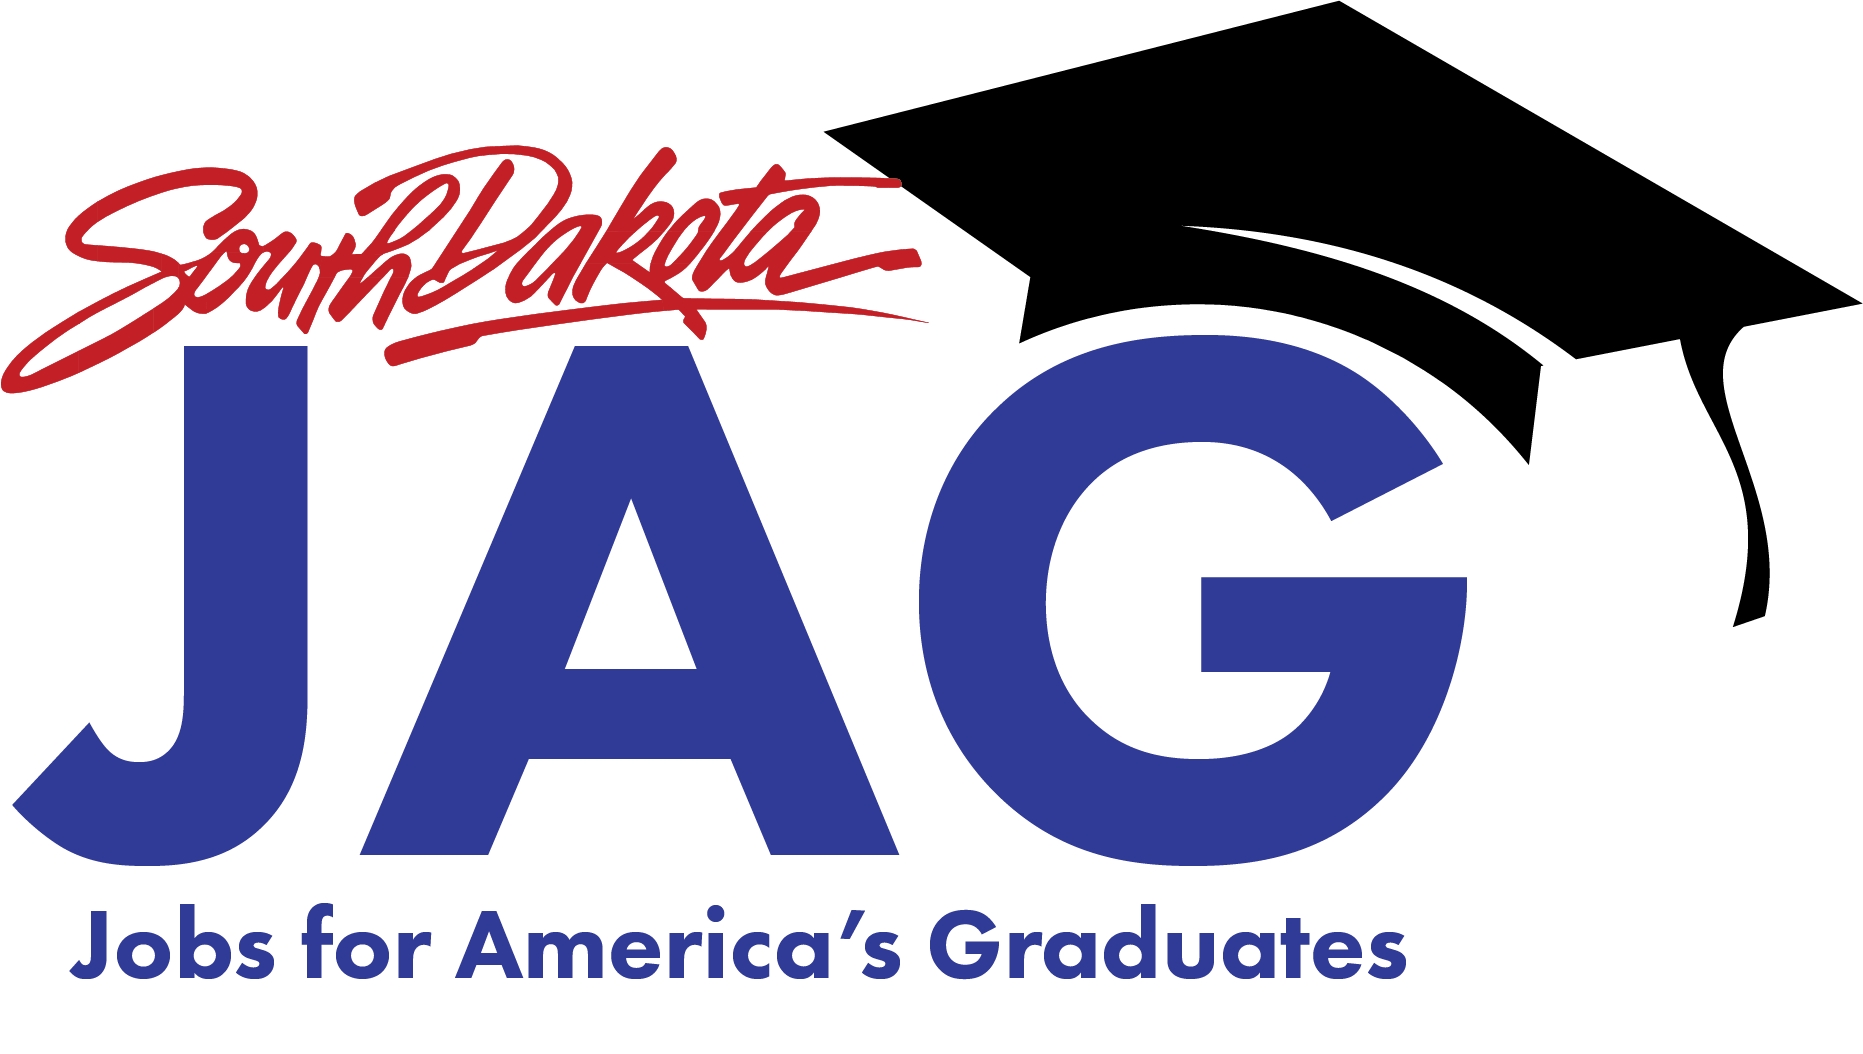 South Dakota Jobs for America's Graduates Program